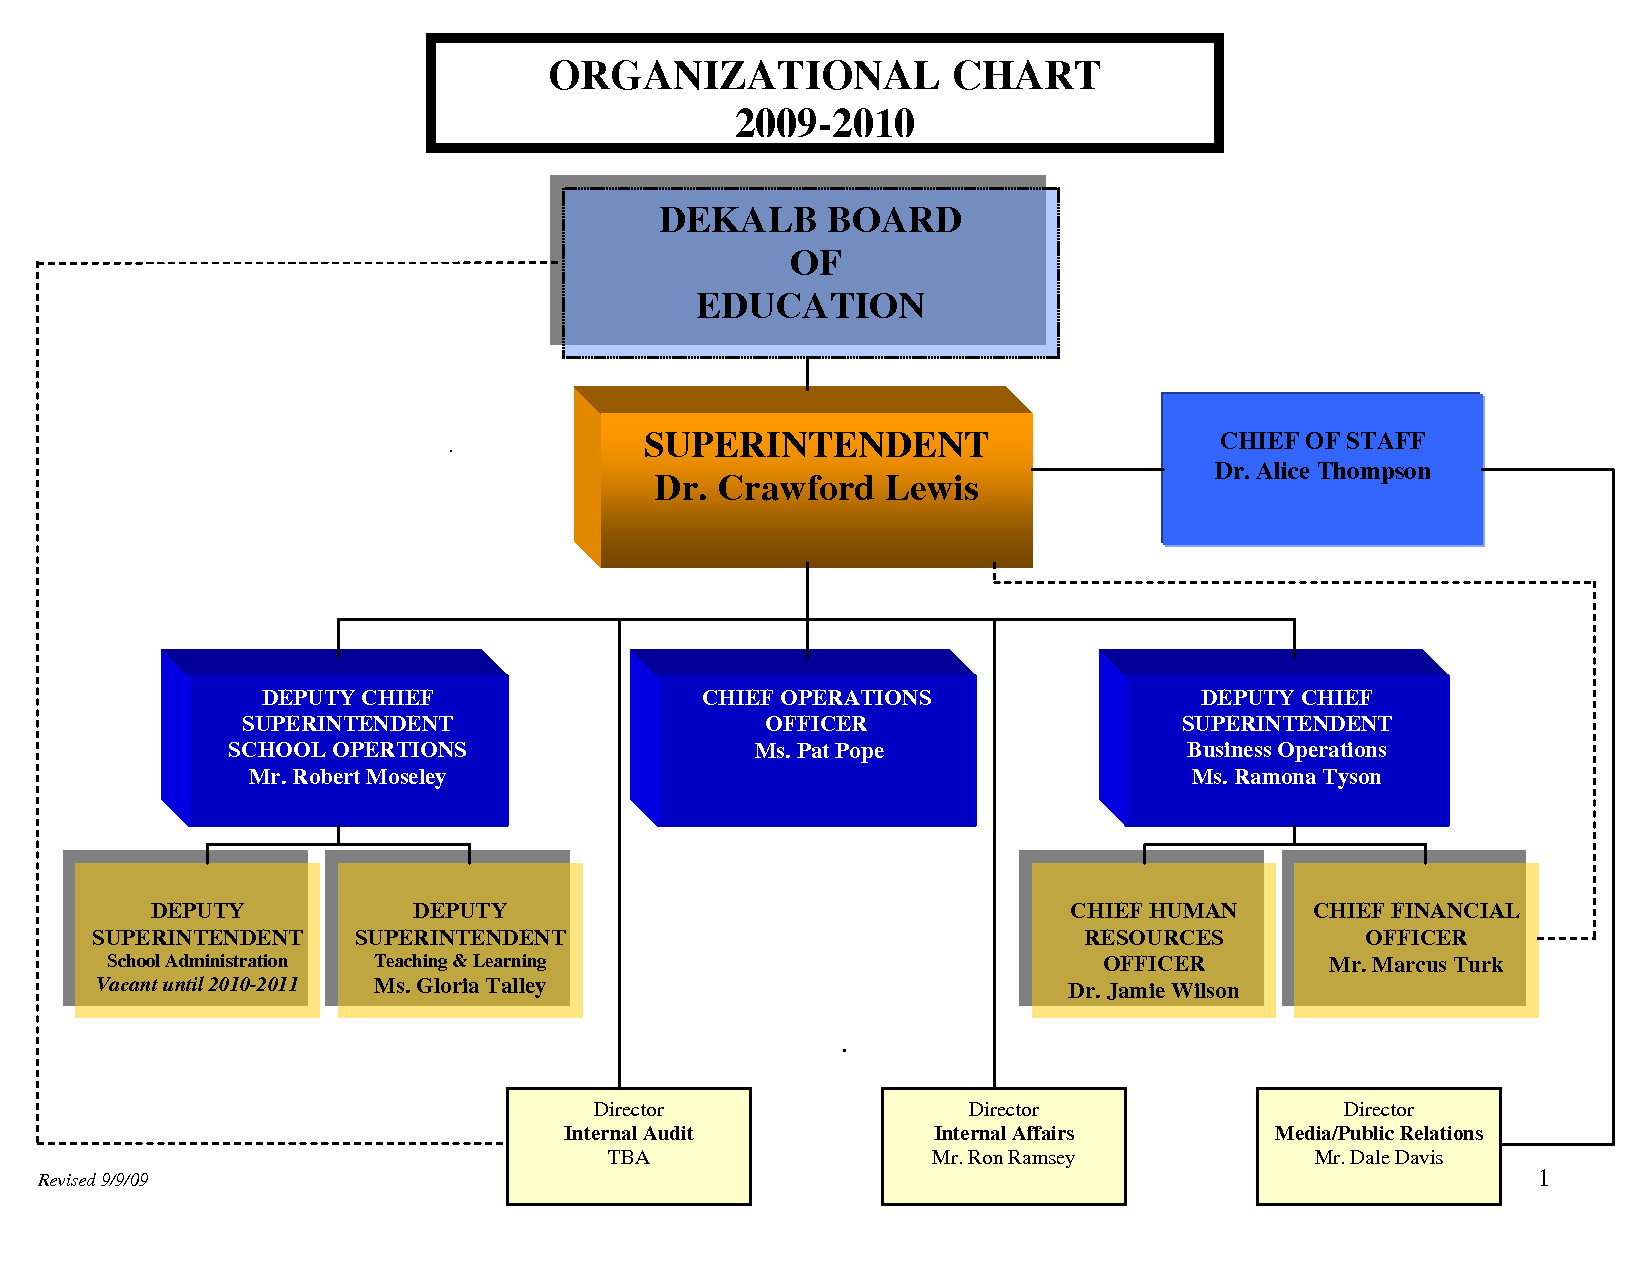 Organizational Chart Template Word | E Commercewordpress Regarding Organization Chart Template Word